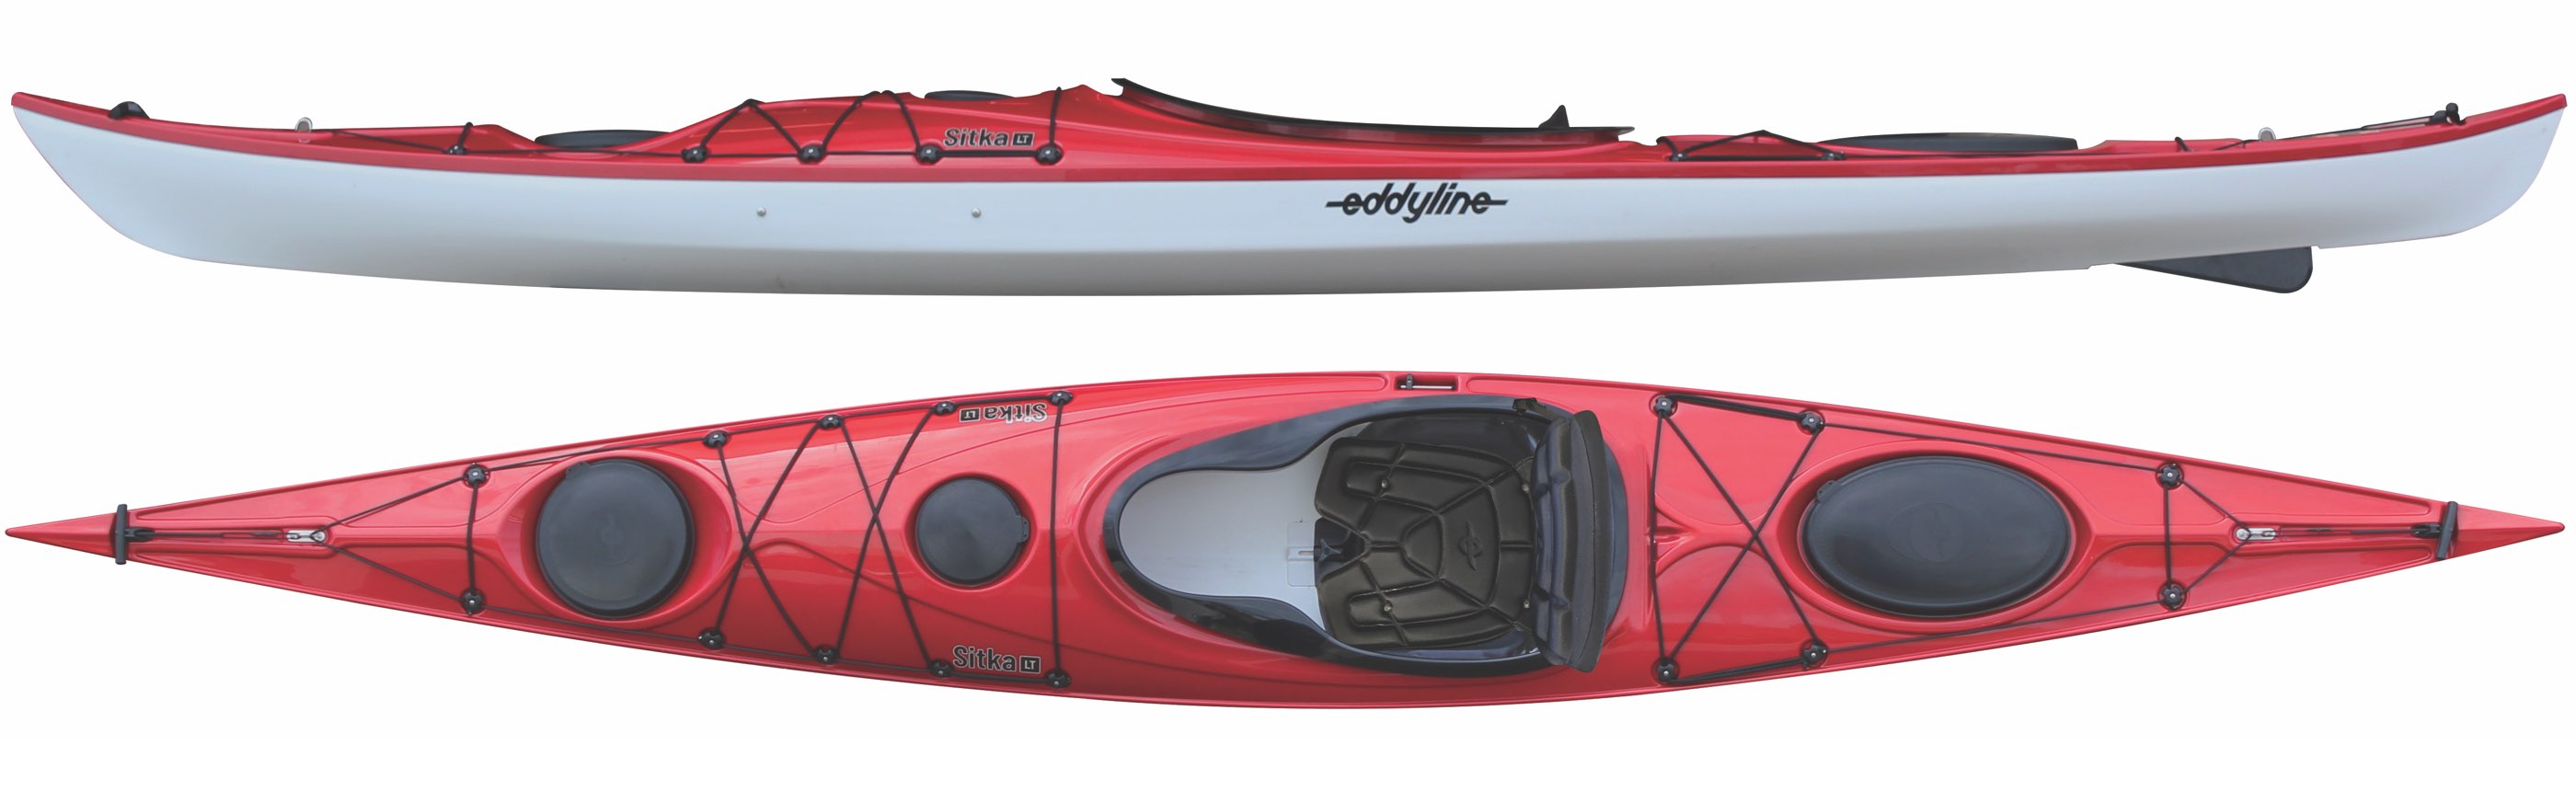 Kayaks: Sitka LT by Eddyline Kayaks - Image 4643